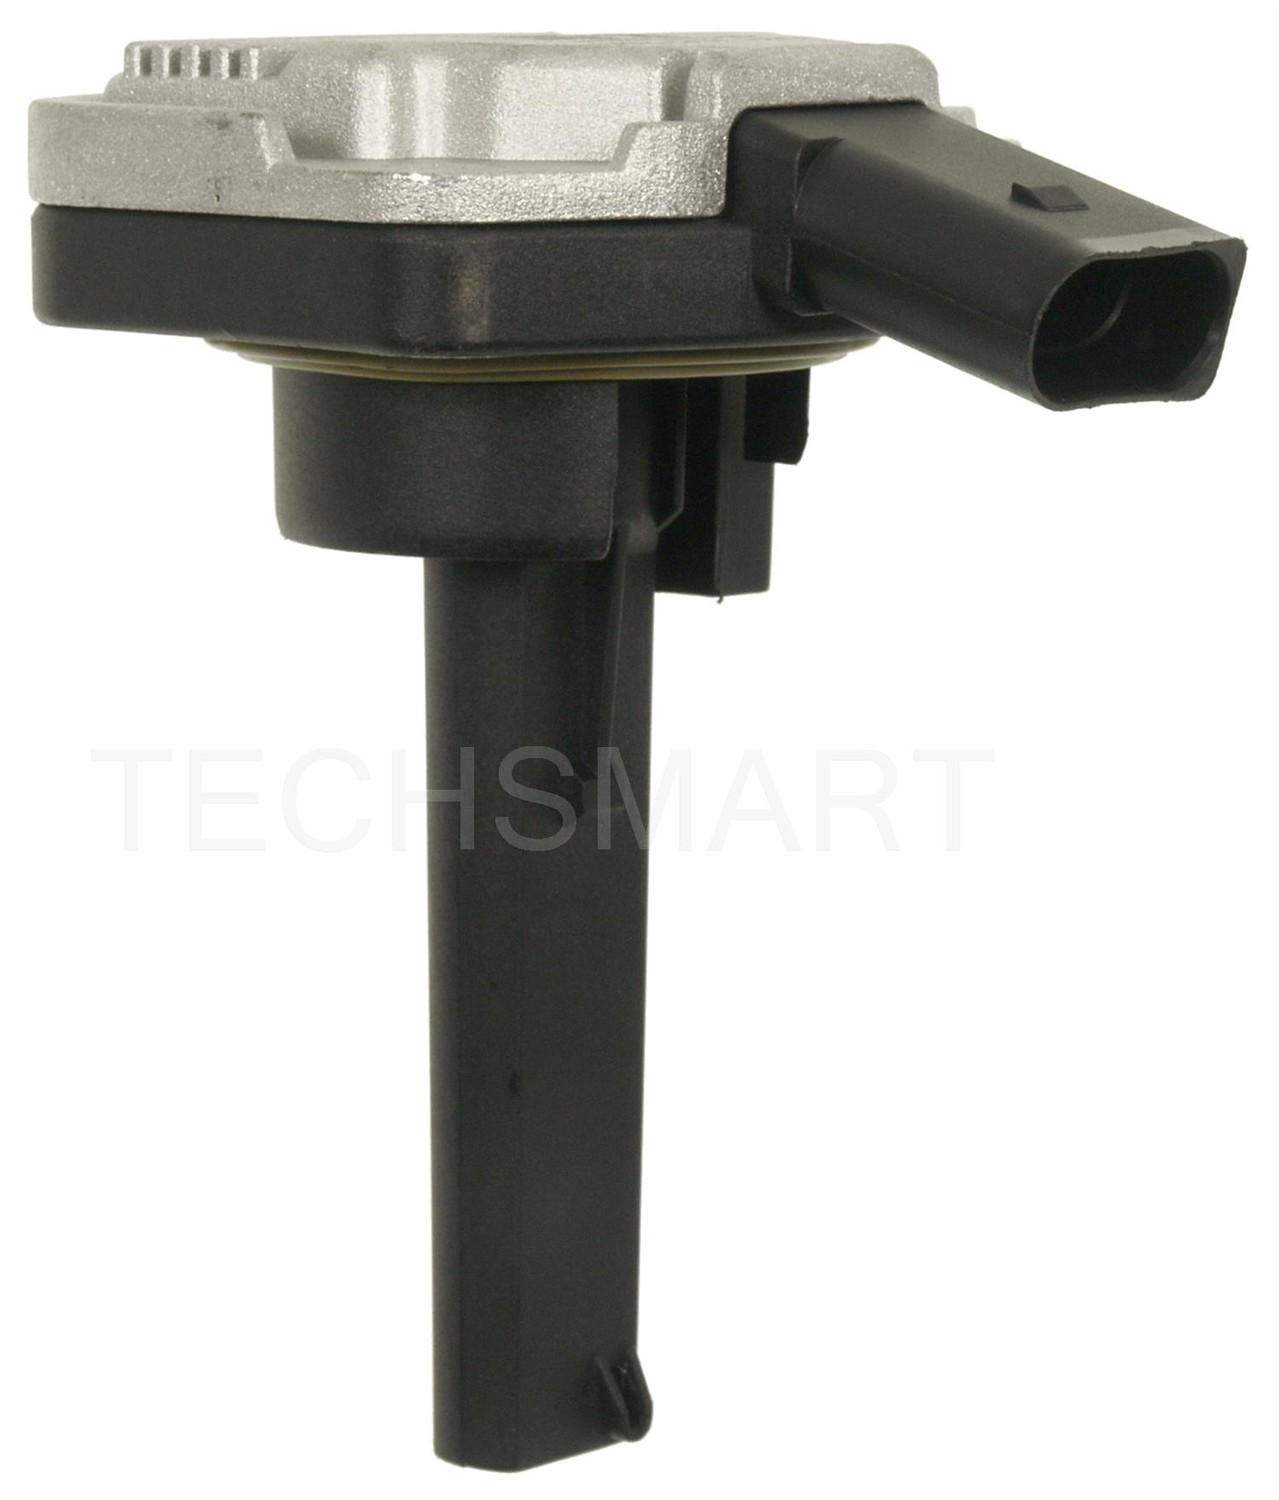 Foto de Sensor de Nivel de Aceite de Motor para Audi Volkswagen Marca TECHSMART Nmero de Parte #L26002